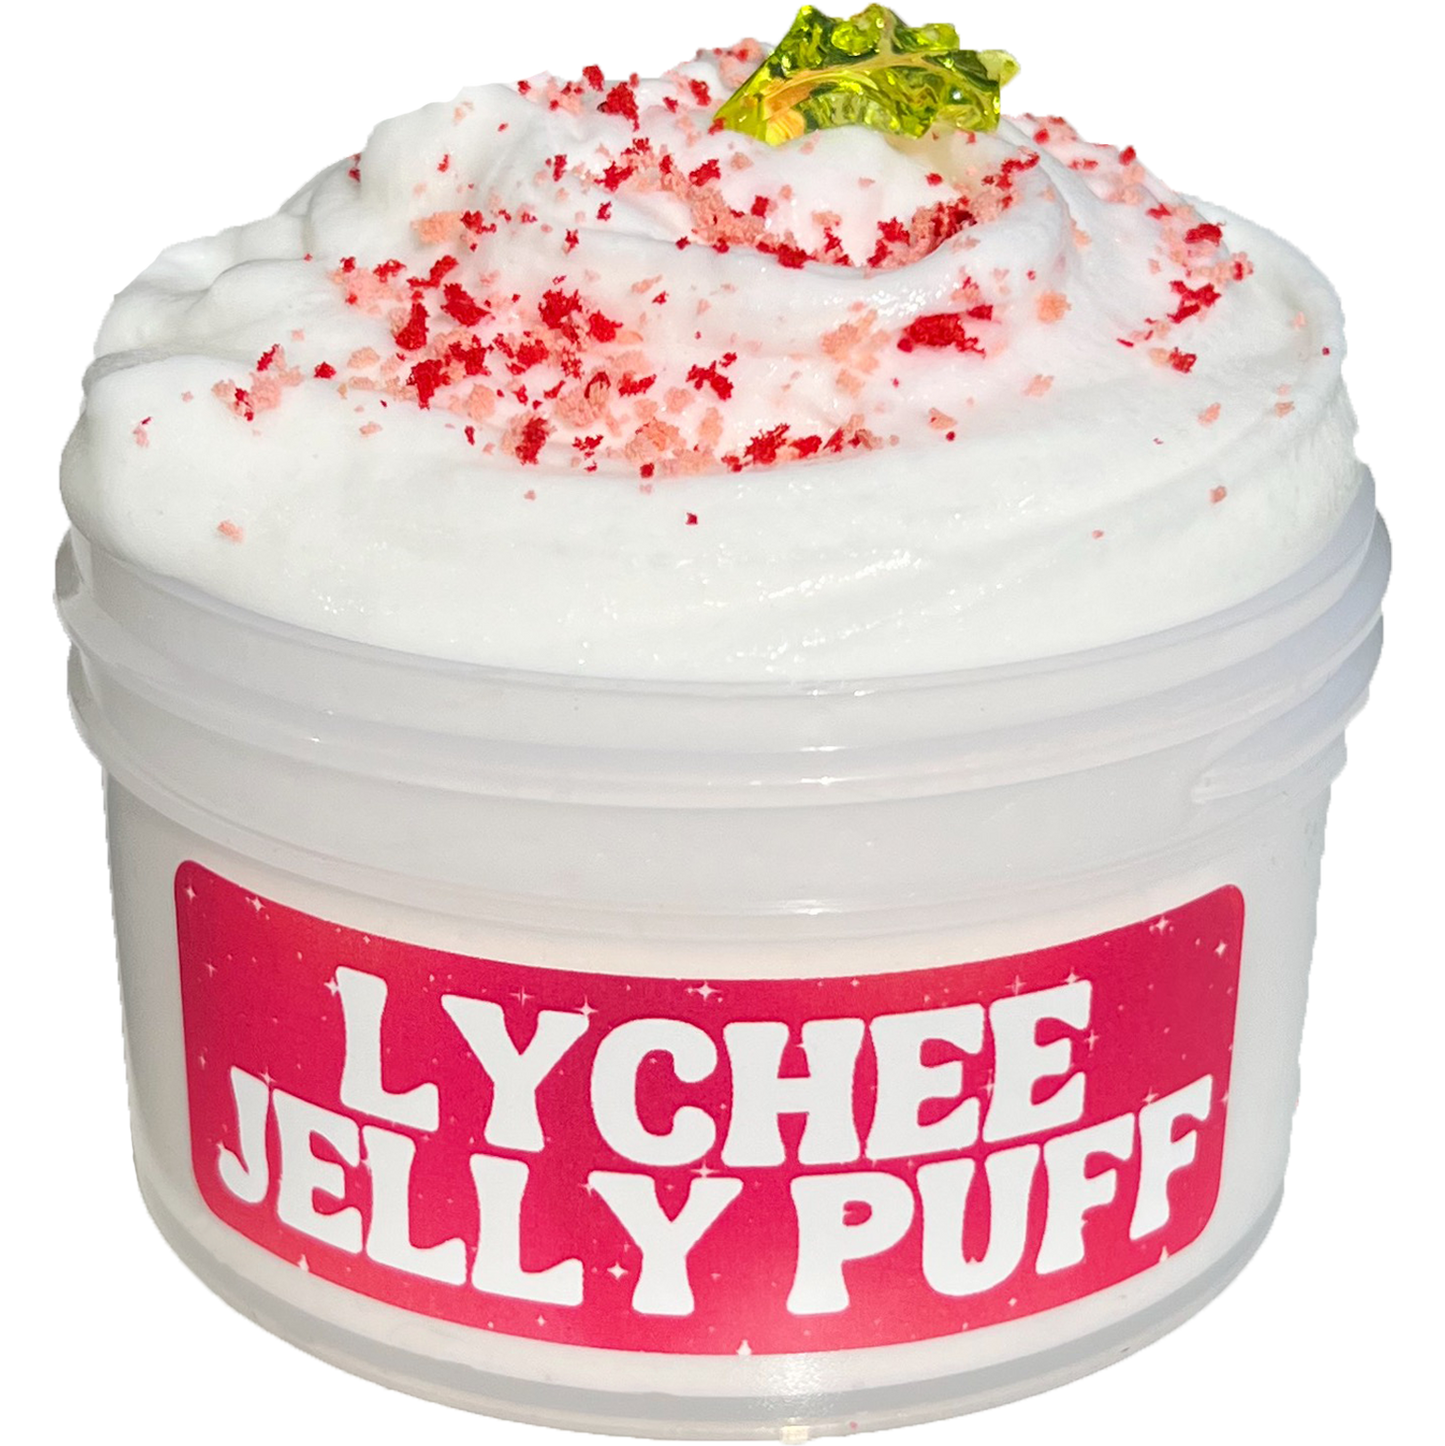 Lychee Jelly Puff